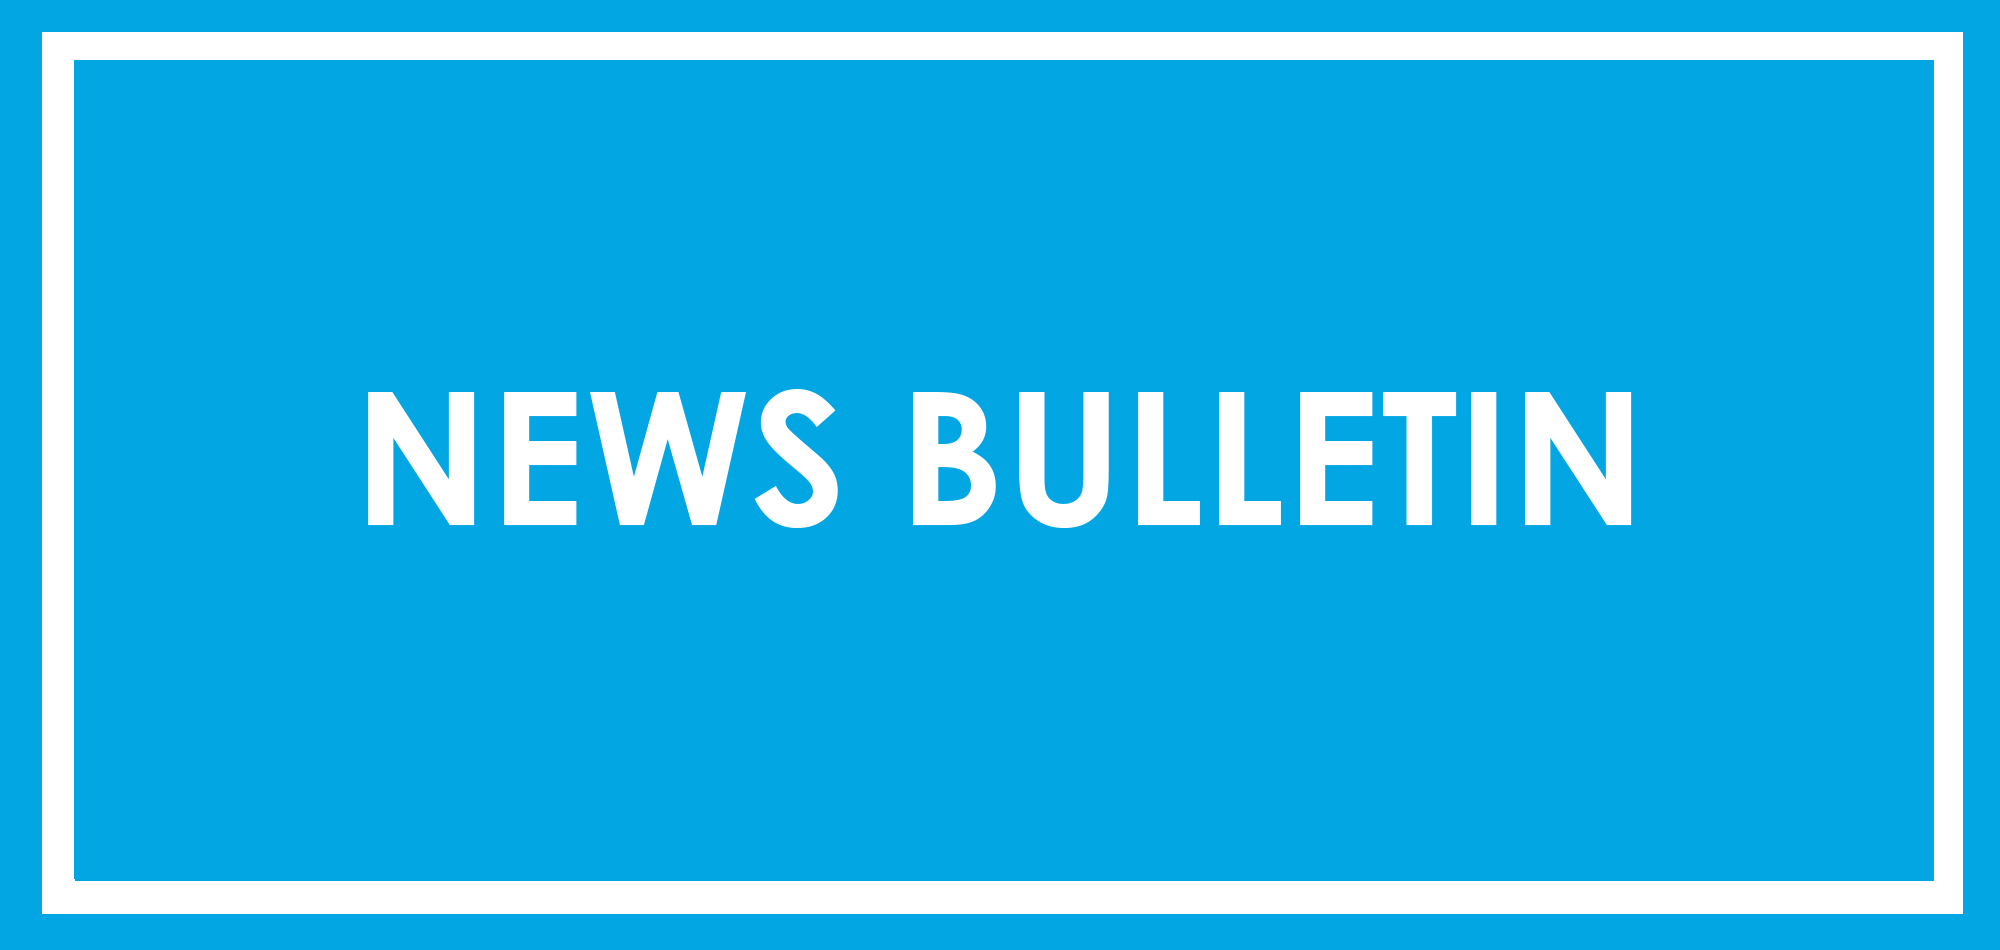 News Bulletin - 05.04.21